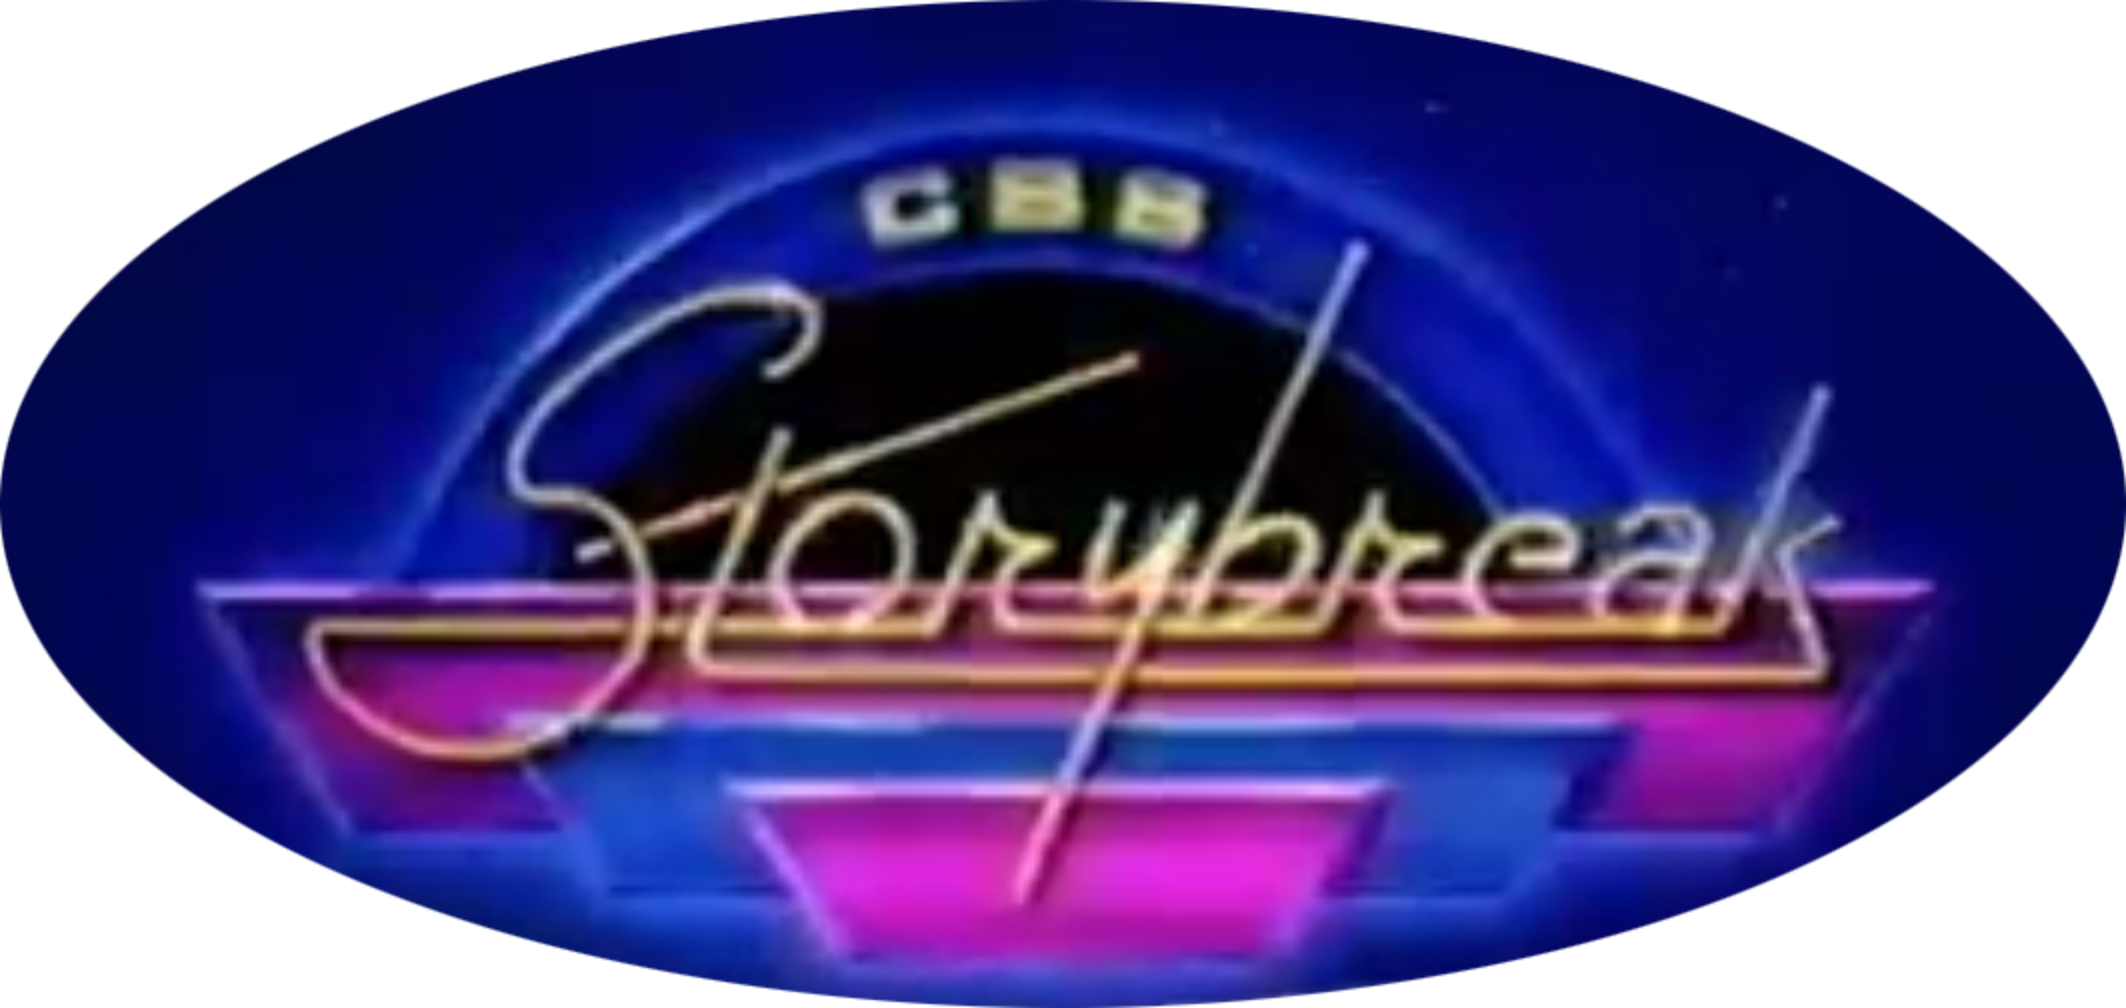 CBS Storybreak 